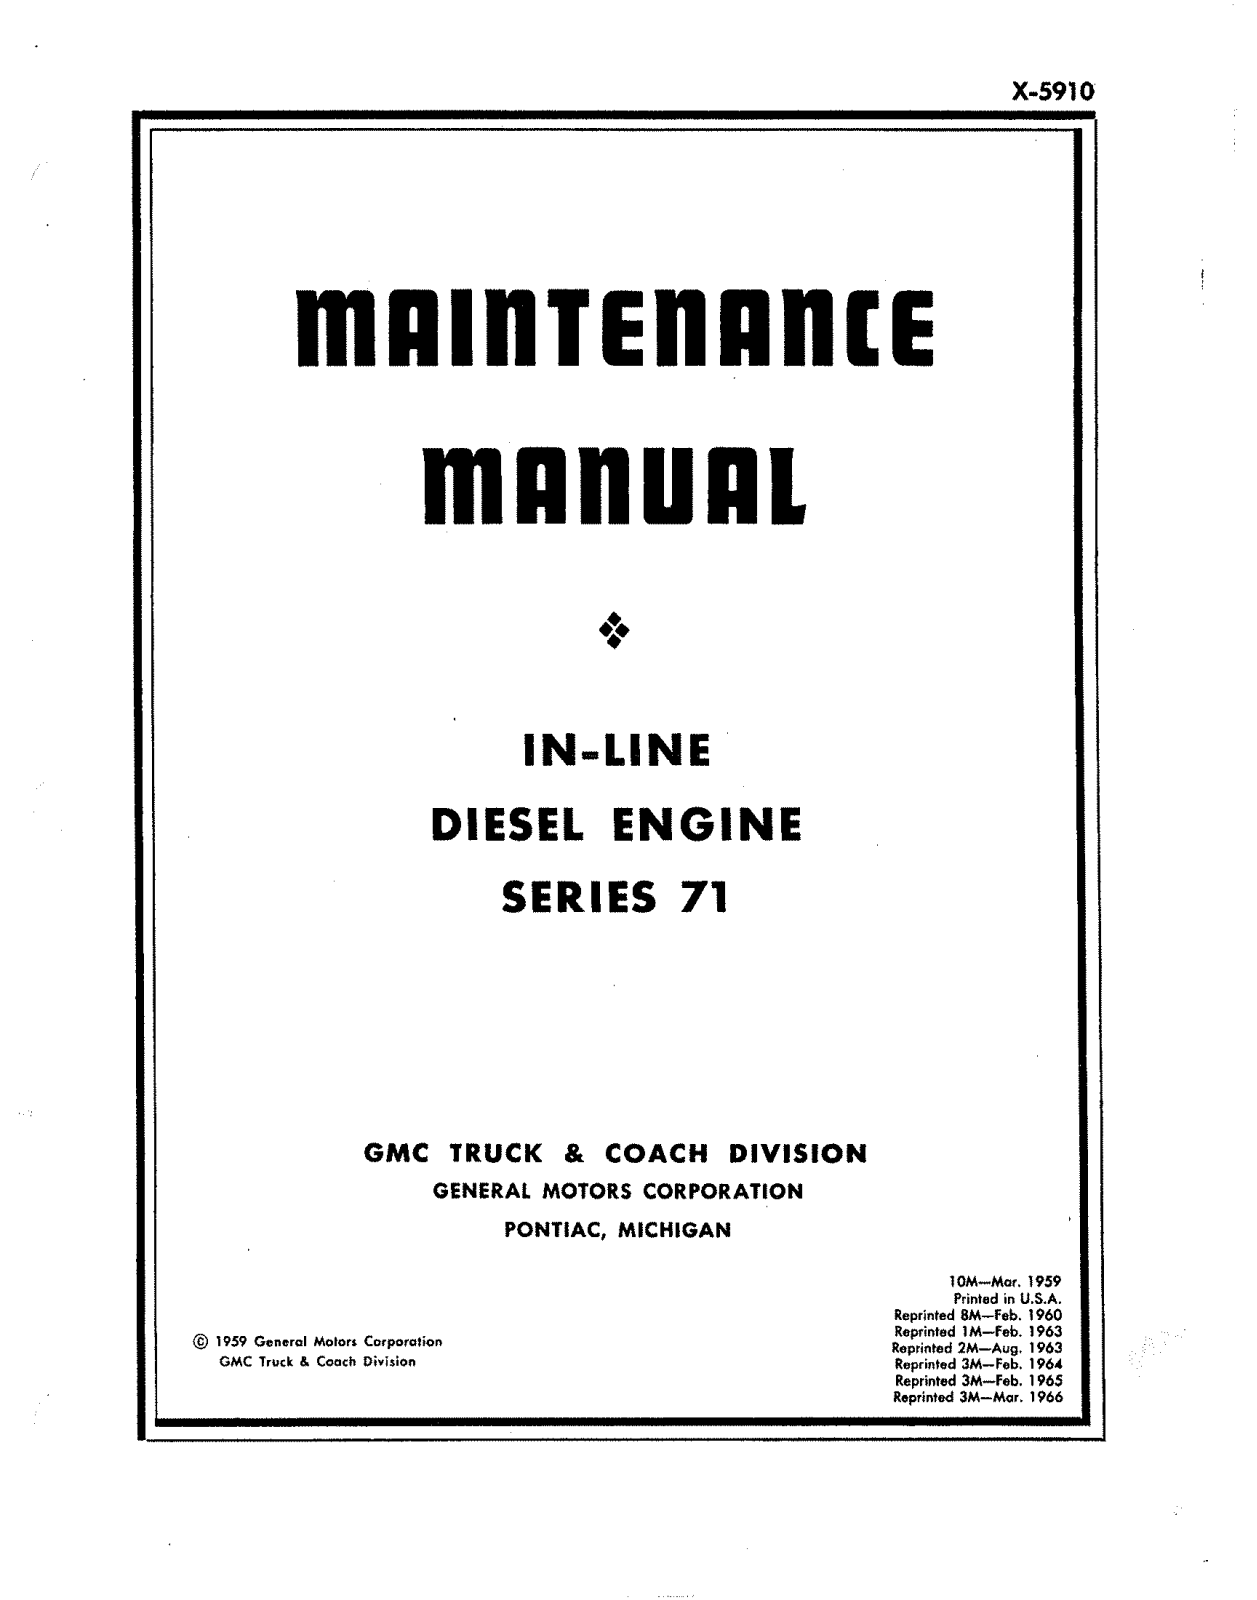 Detroit Diesel Engine 71 Service Manual